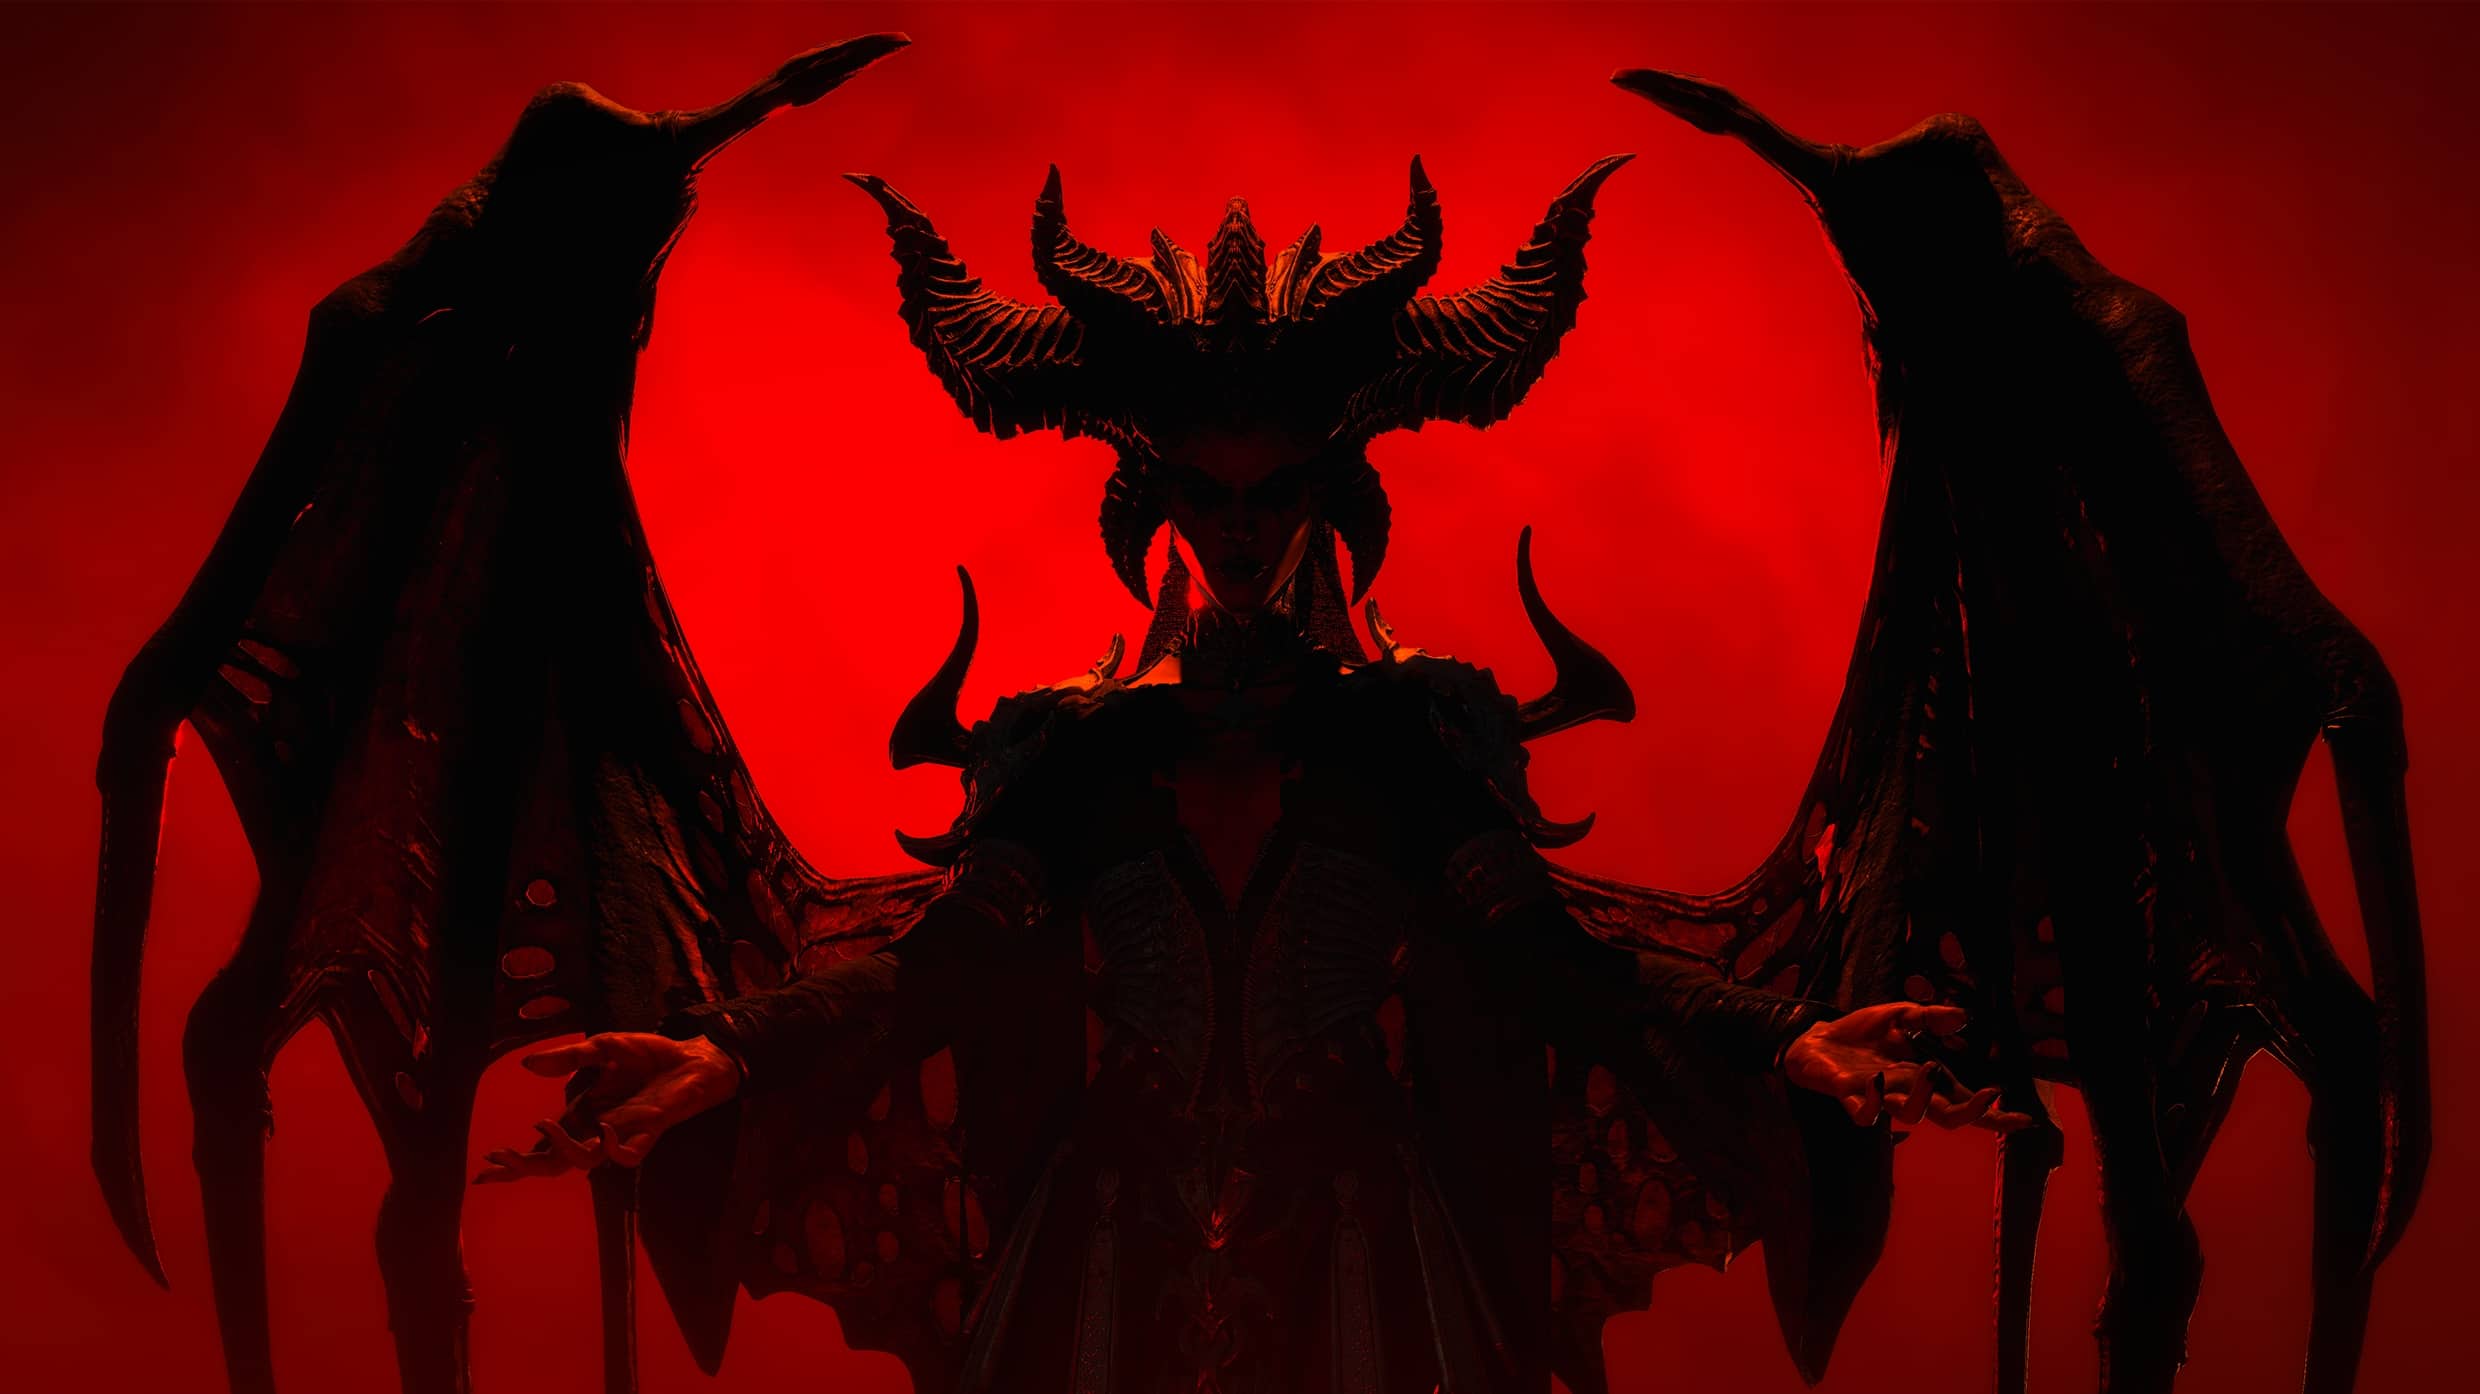 in 4 final open Diablo 2023 beta happening May The is